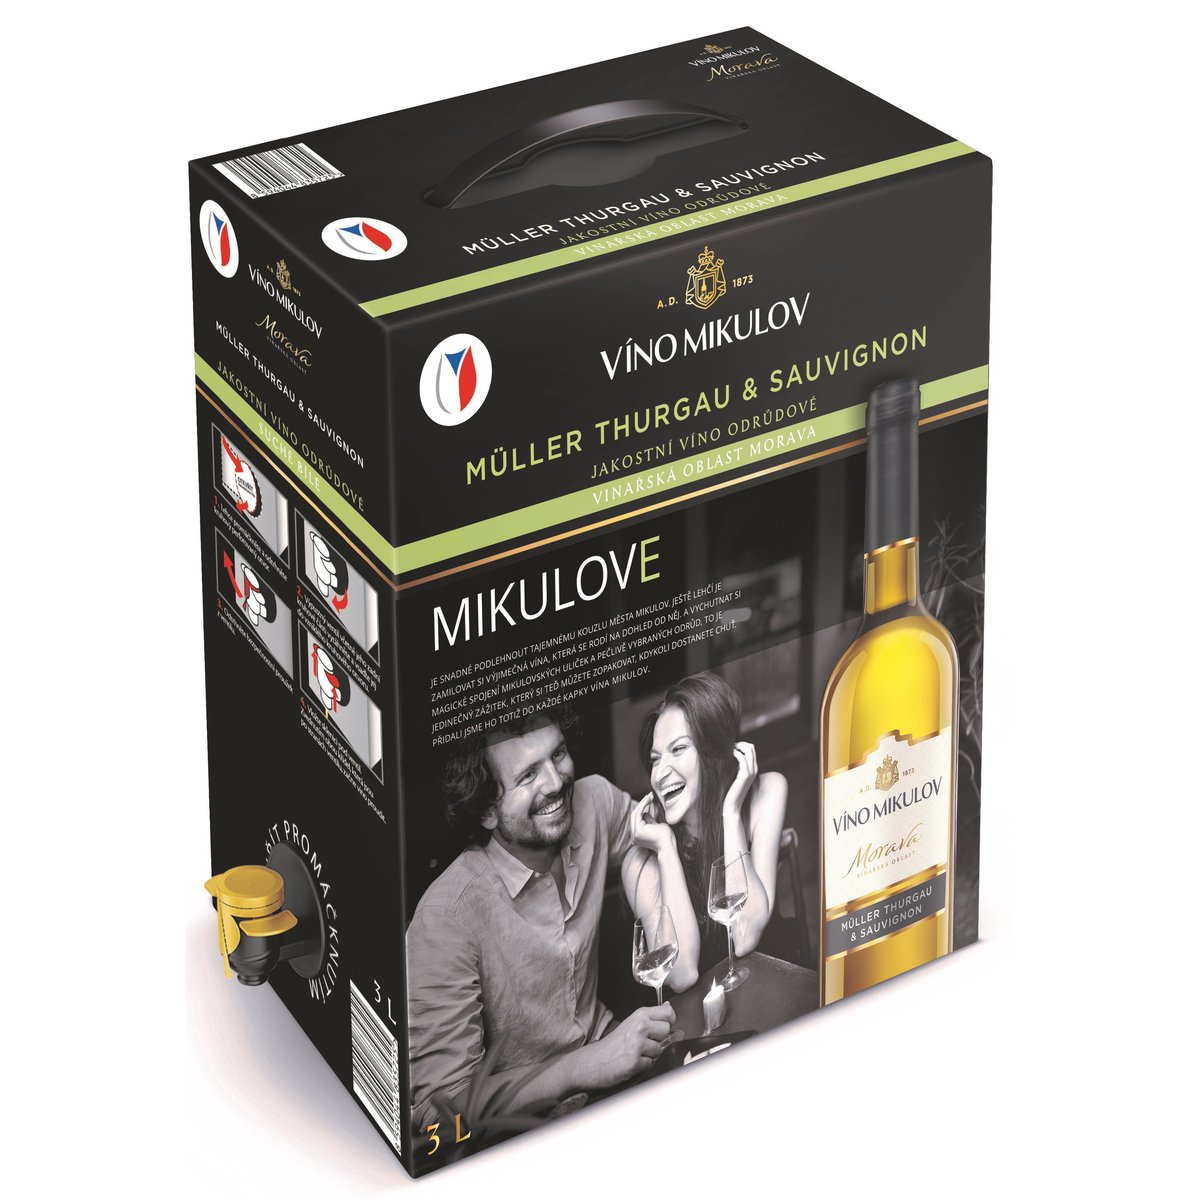 Víno Mikulov Morava Müller Thurgau & Sauvignon bag in box